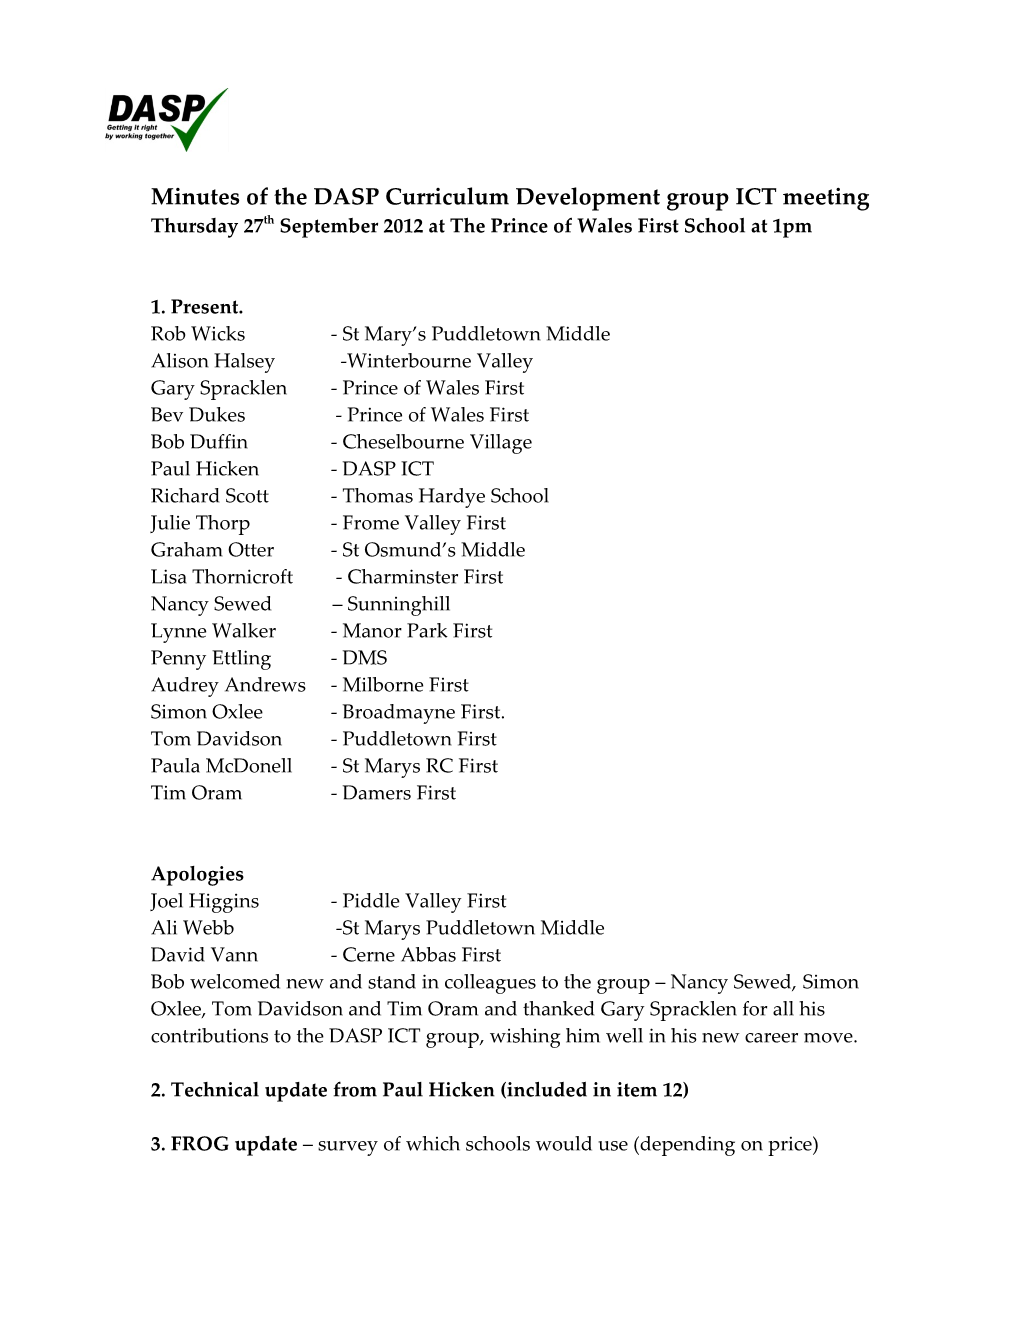 DASP Curriculum Development Group ICT Meeting